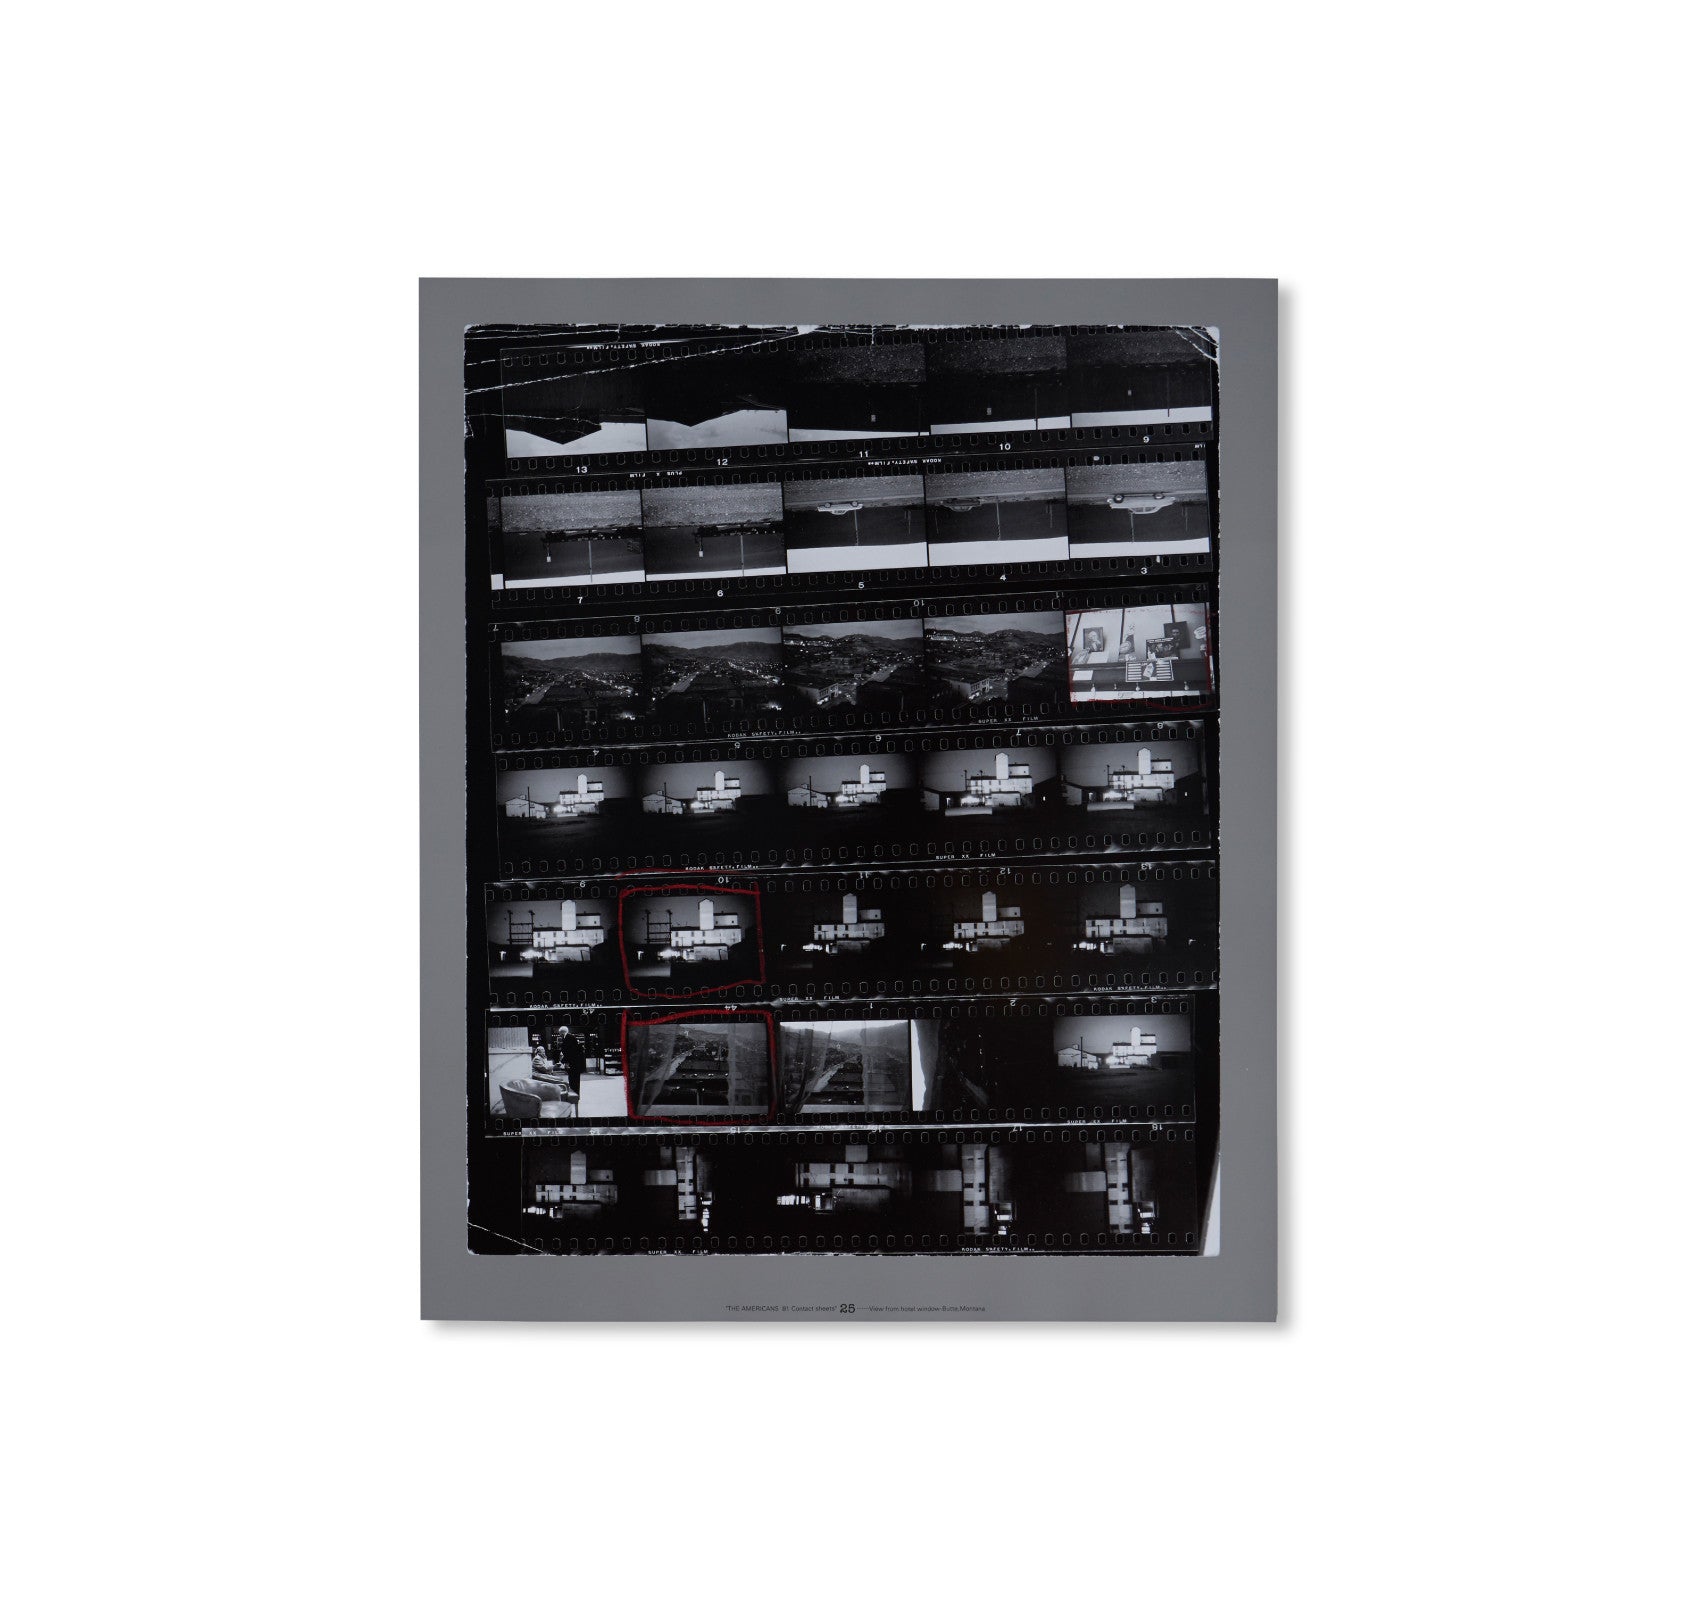 THE AMERICANS, 81 CONTACT SHEETS (PAULOWNIA WOOD BOX) by Robert Frank